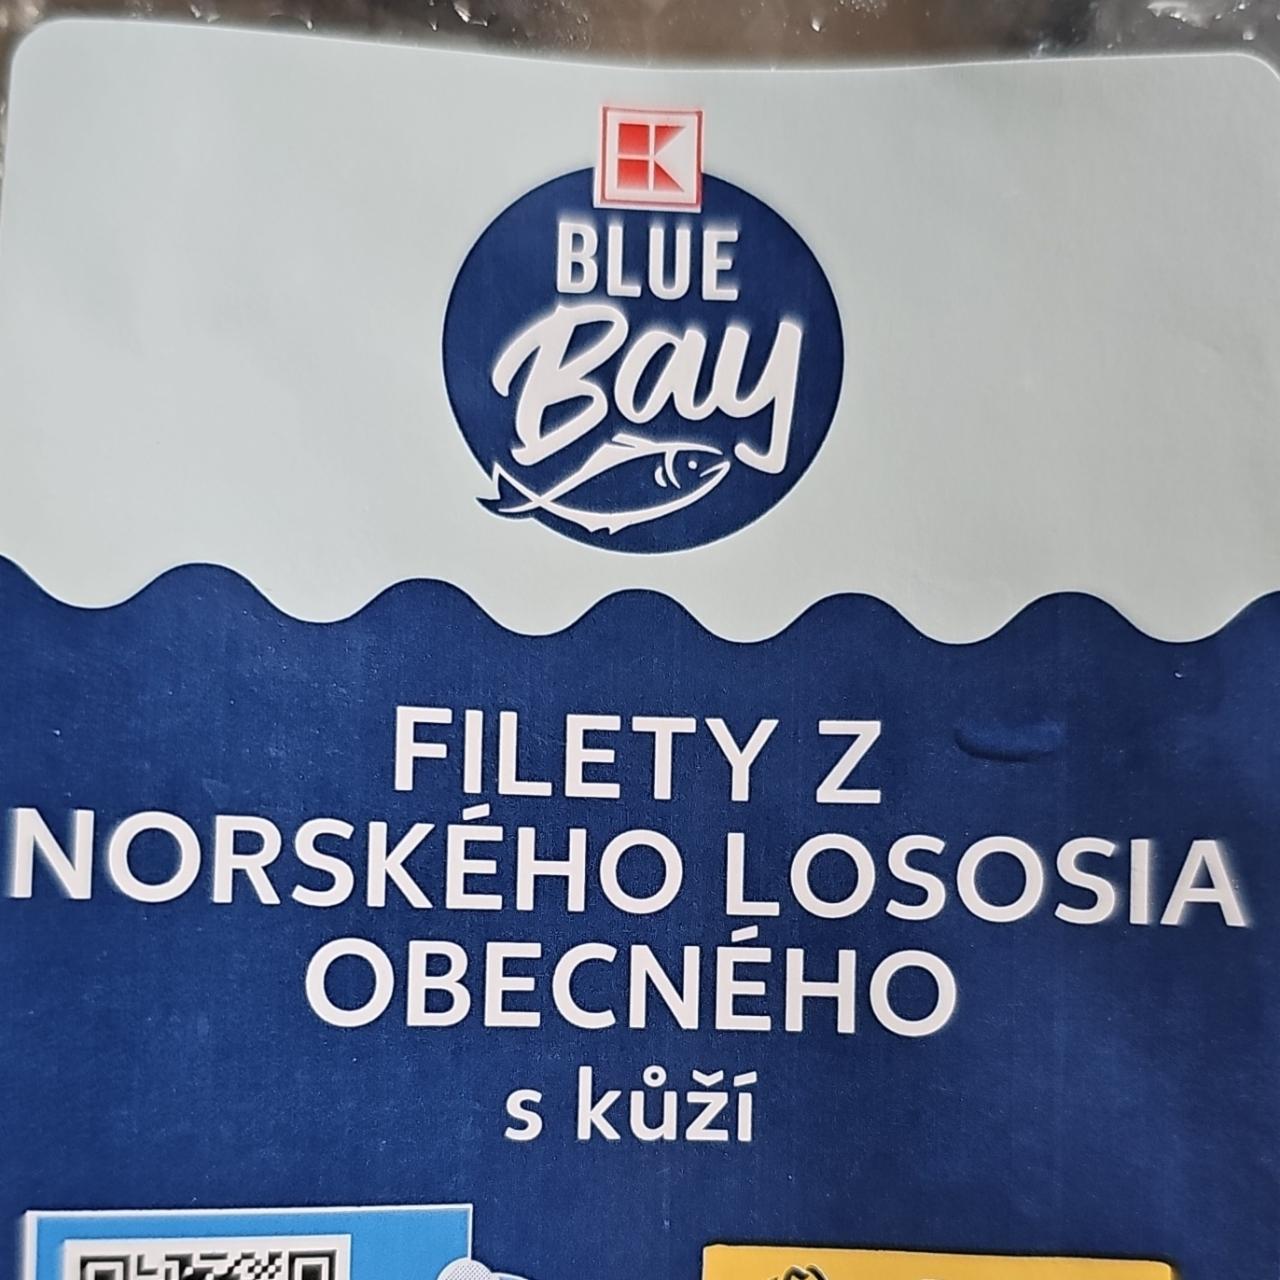 Fotografie - Blue Bay filety z norskeho lososa s kozou